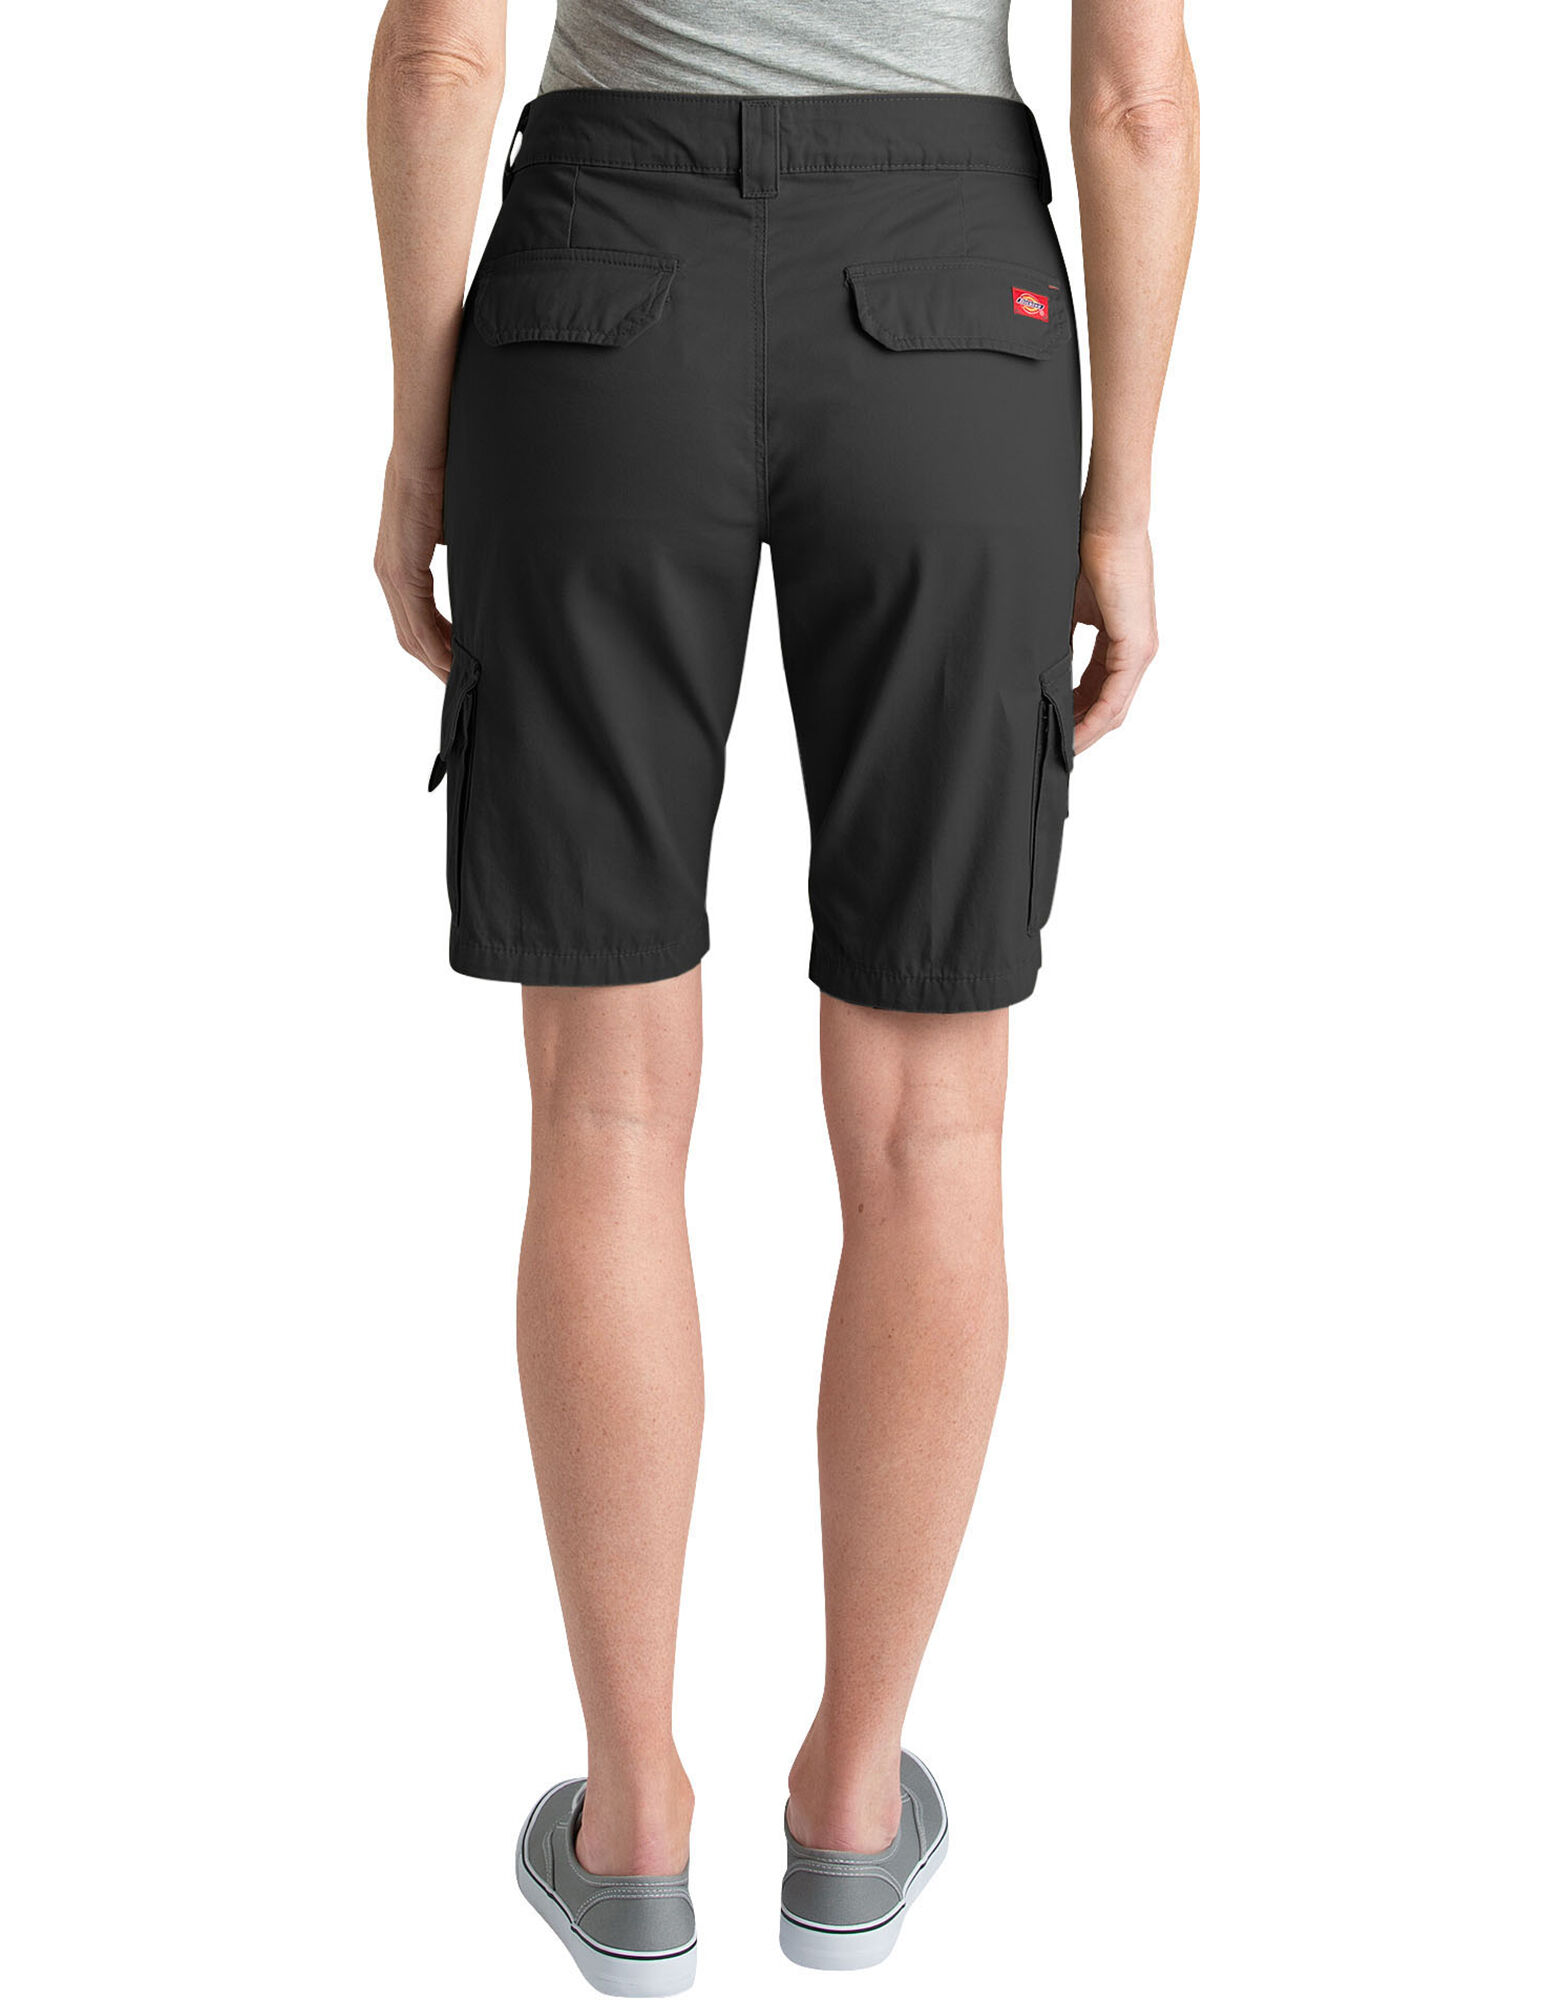 ladies grey cargo shorts